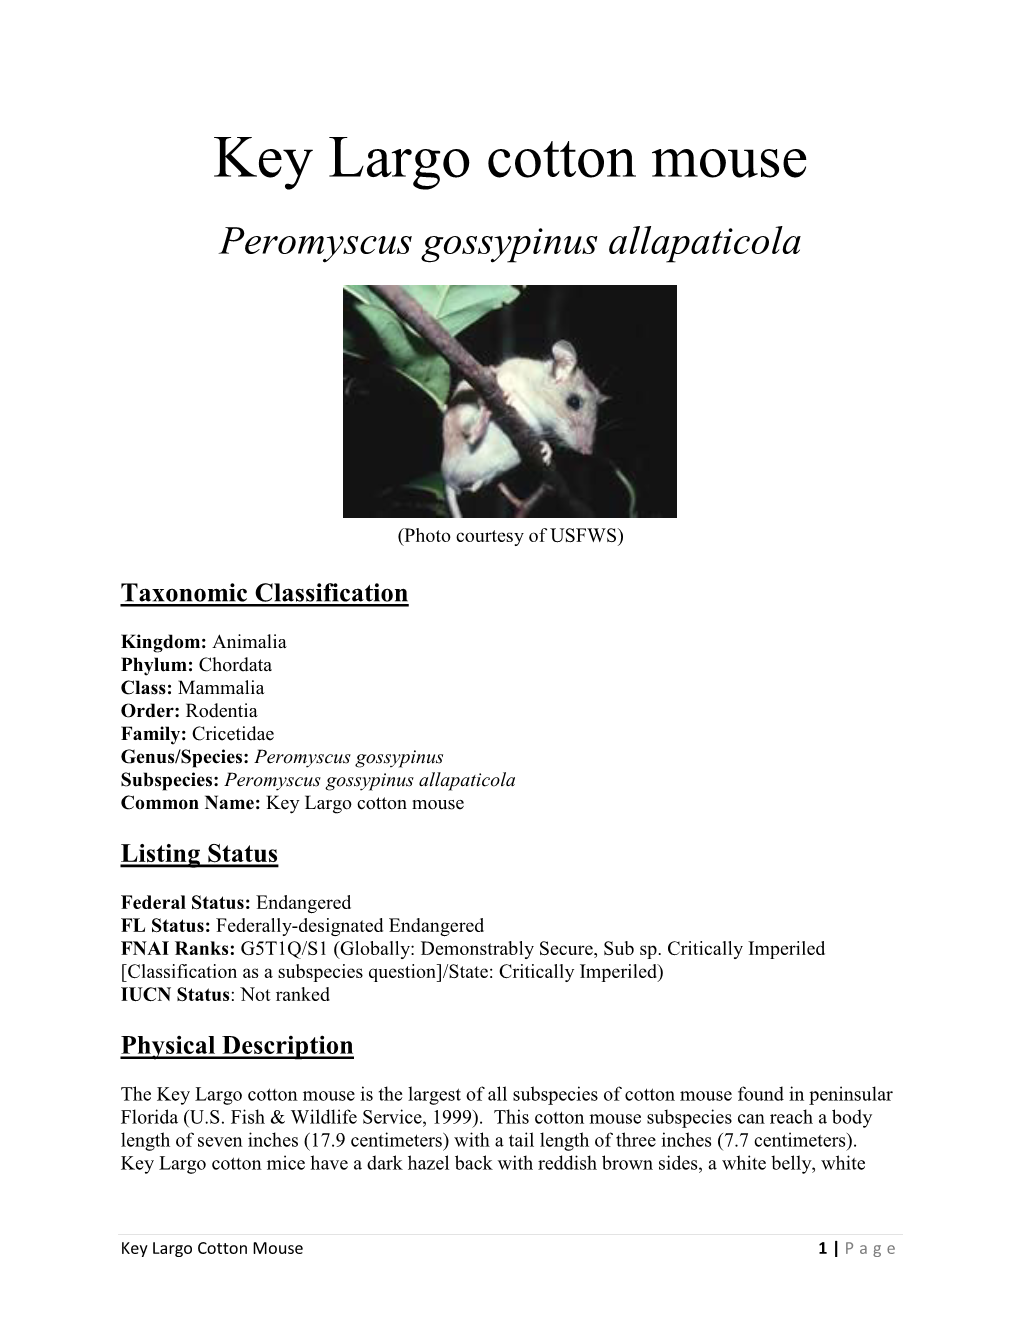 Key Largo Cotton Mouse